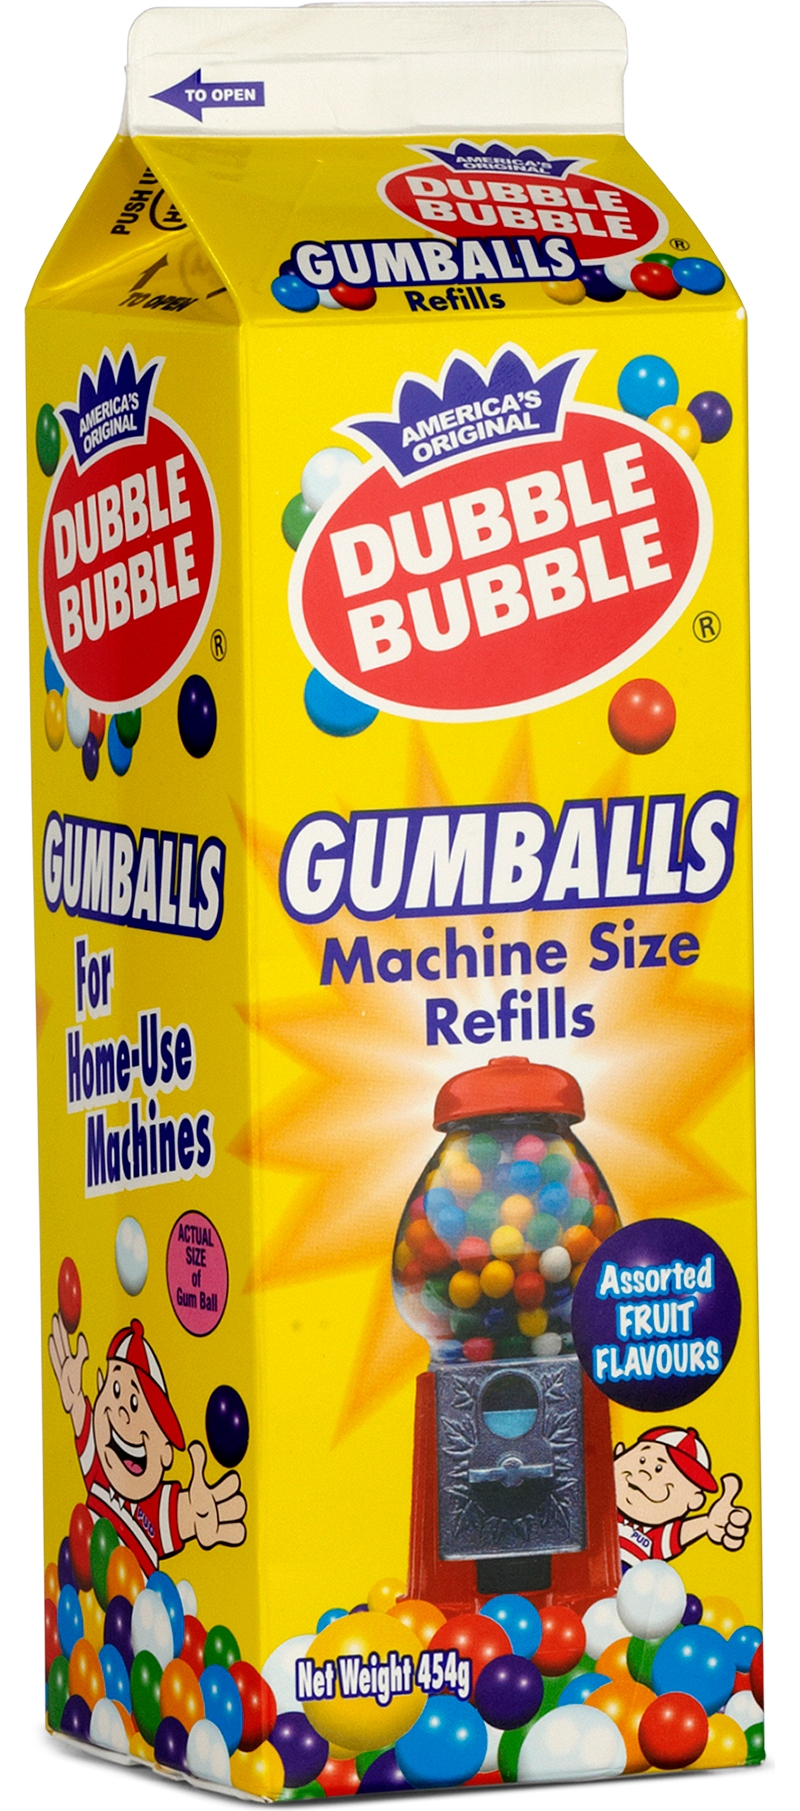 DUBBLE BUBBLE   Gumball refills